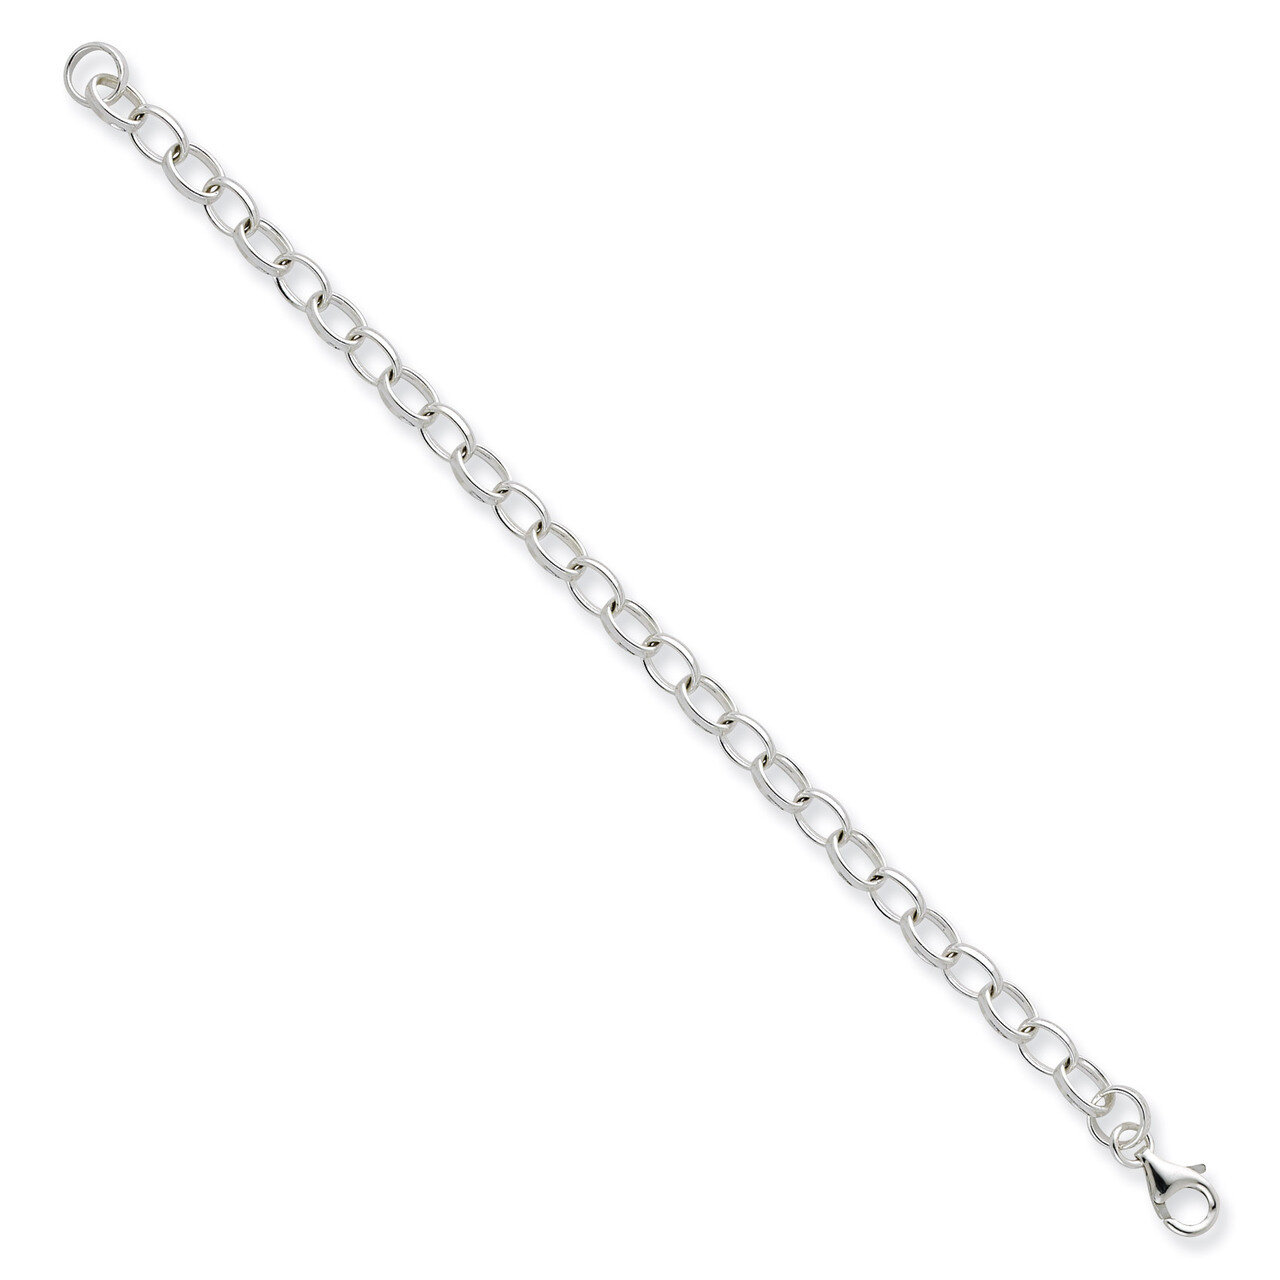 7.5 Inch Charm Bracelet Sterling Silver Rhodium Plated QG2238R-7.5